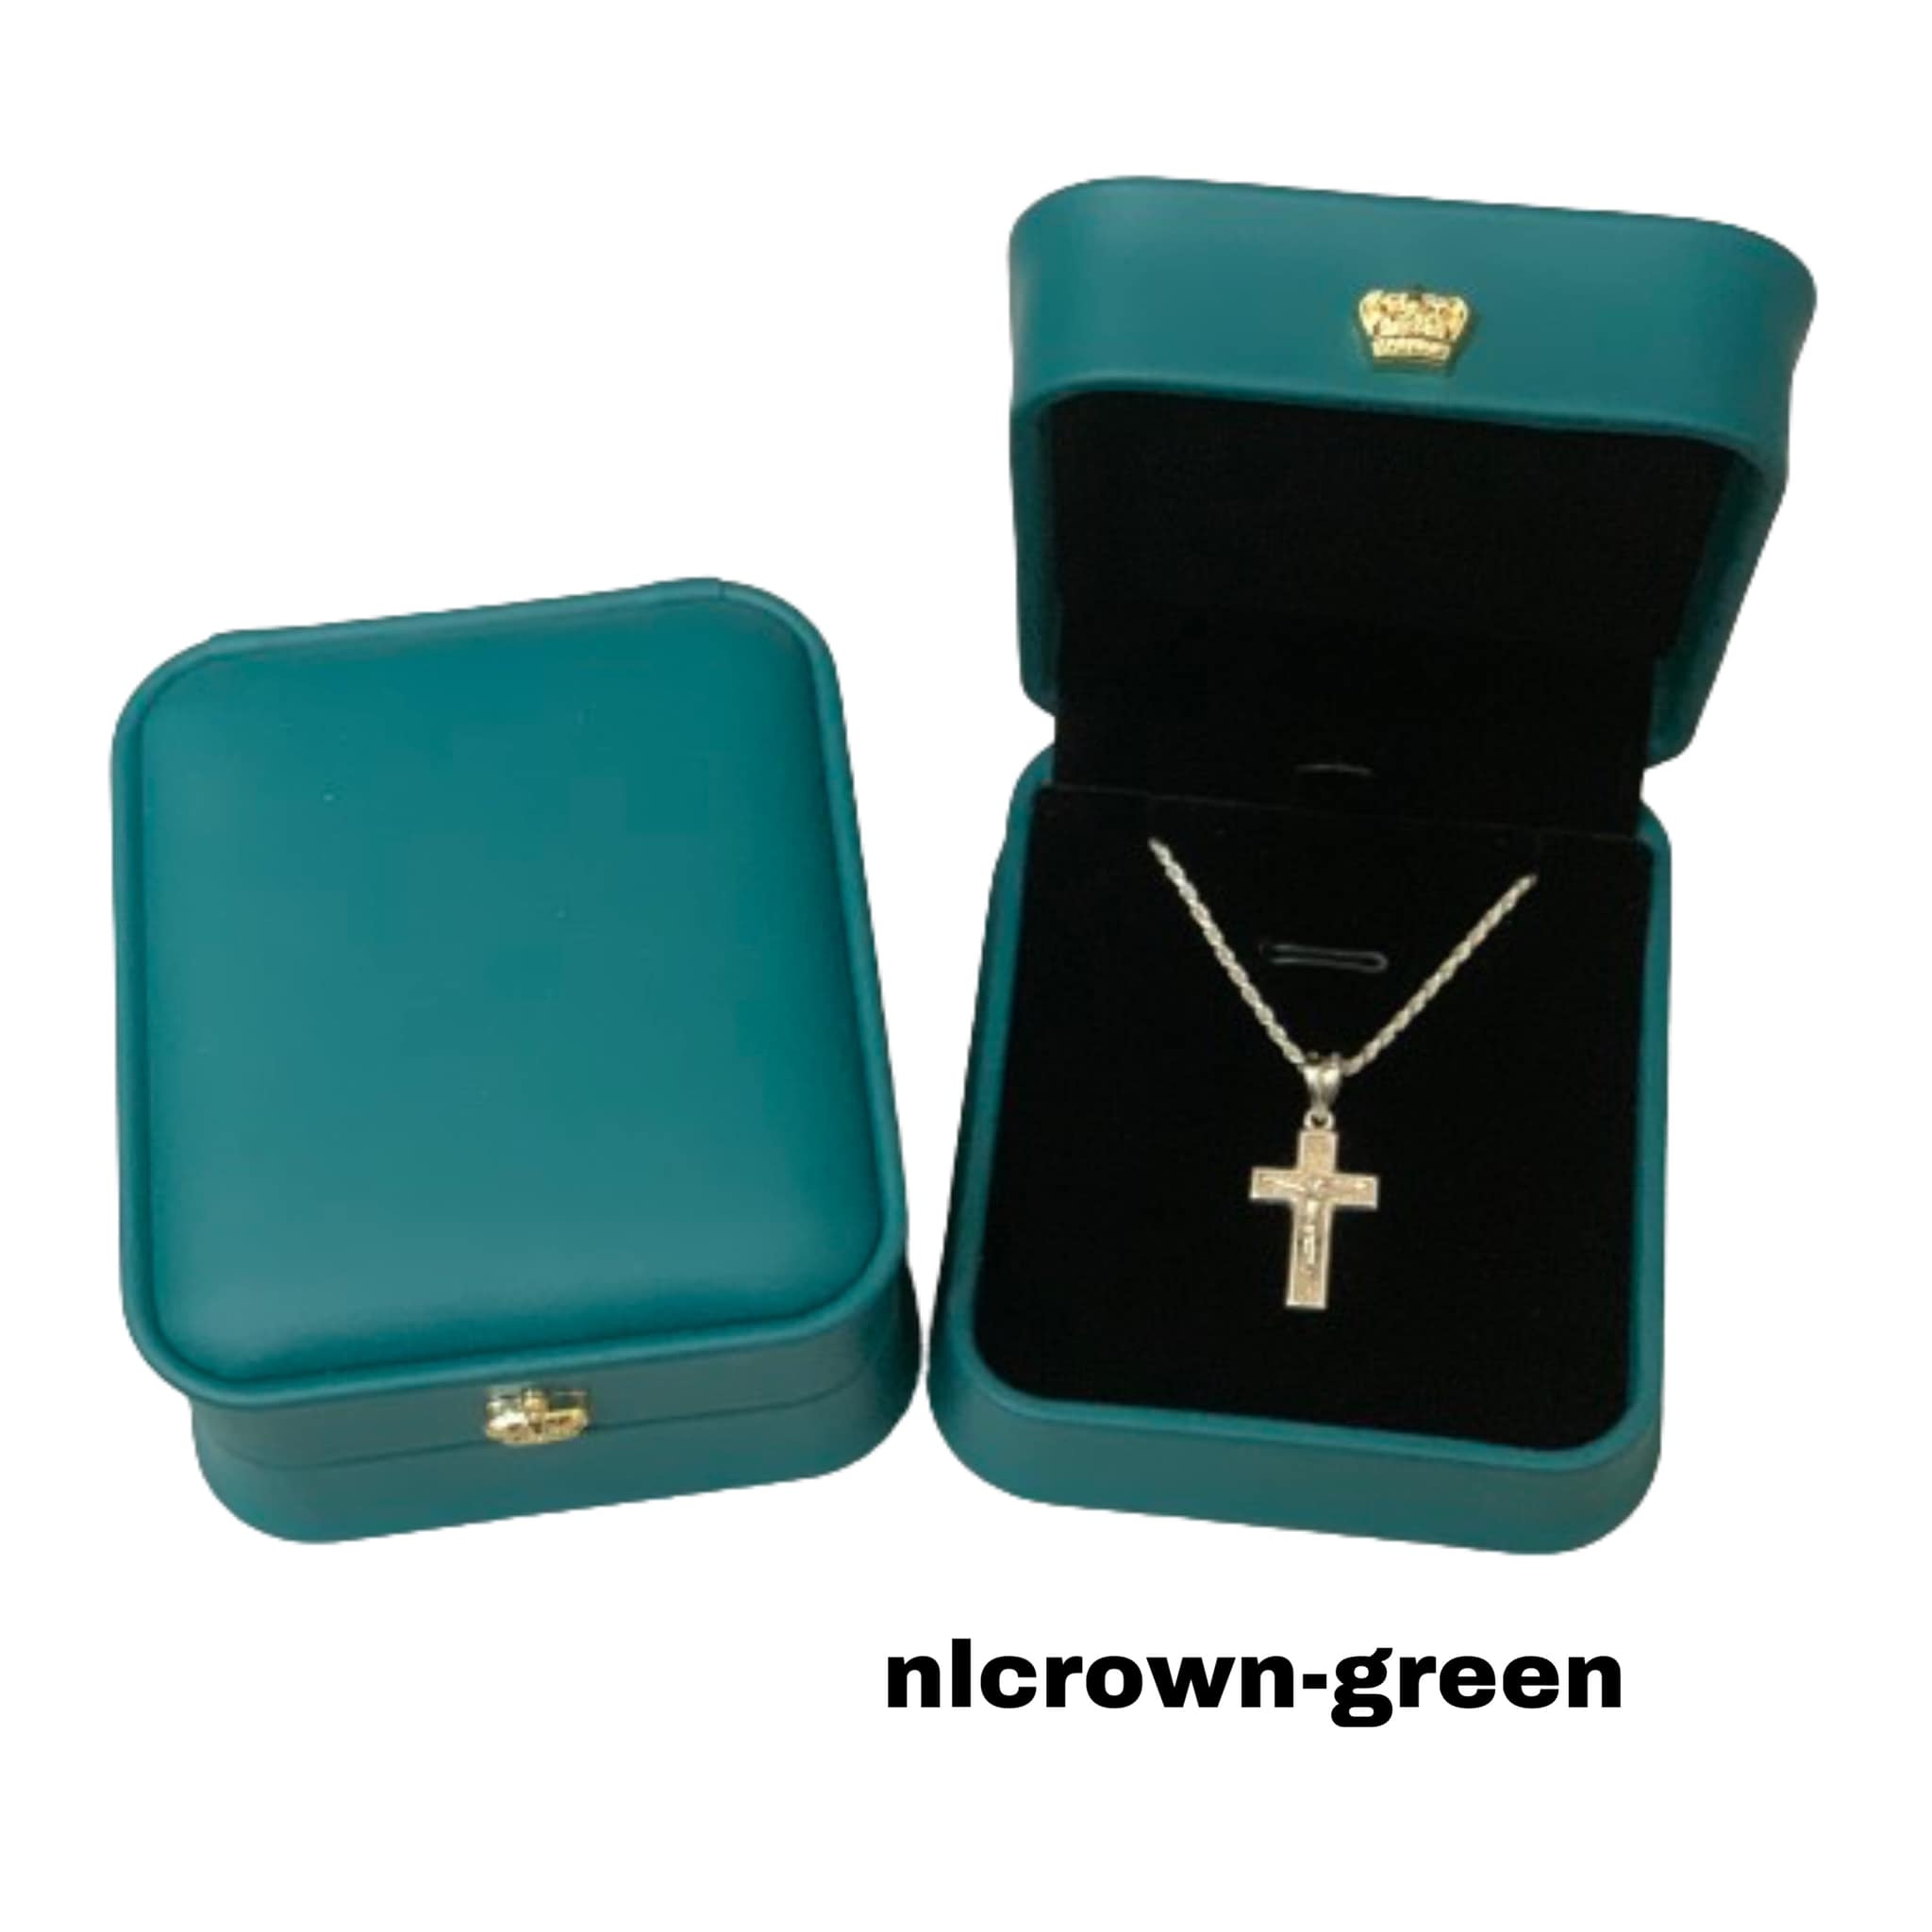 nlcrown-green